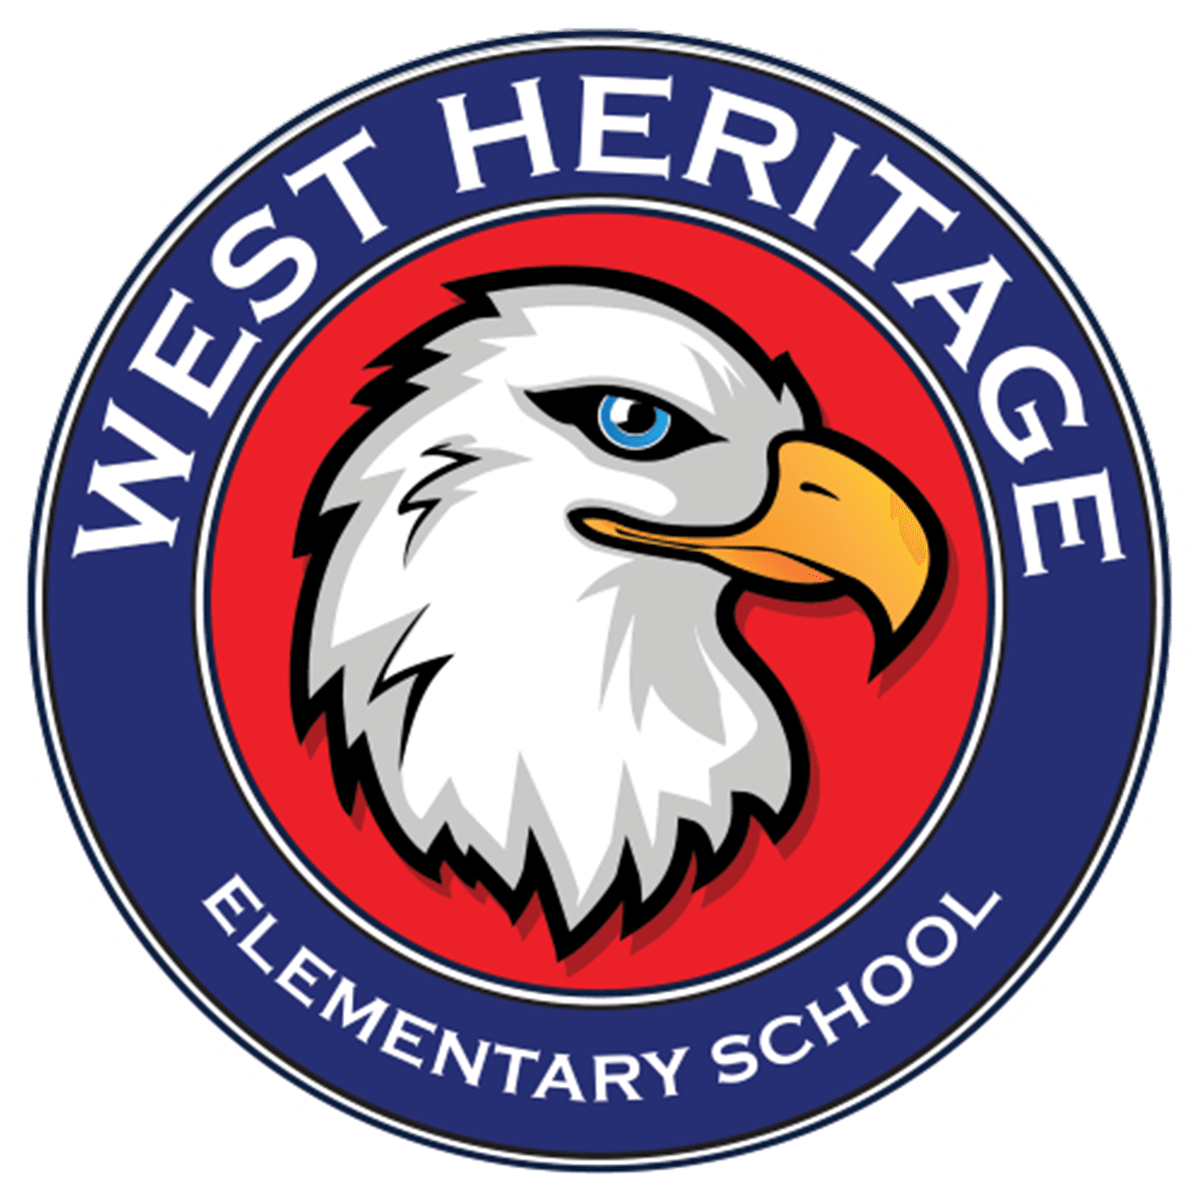 West Heritage Logo